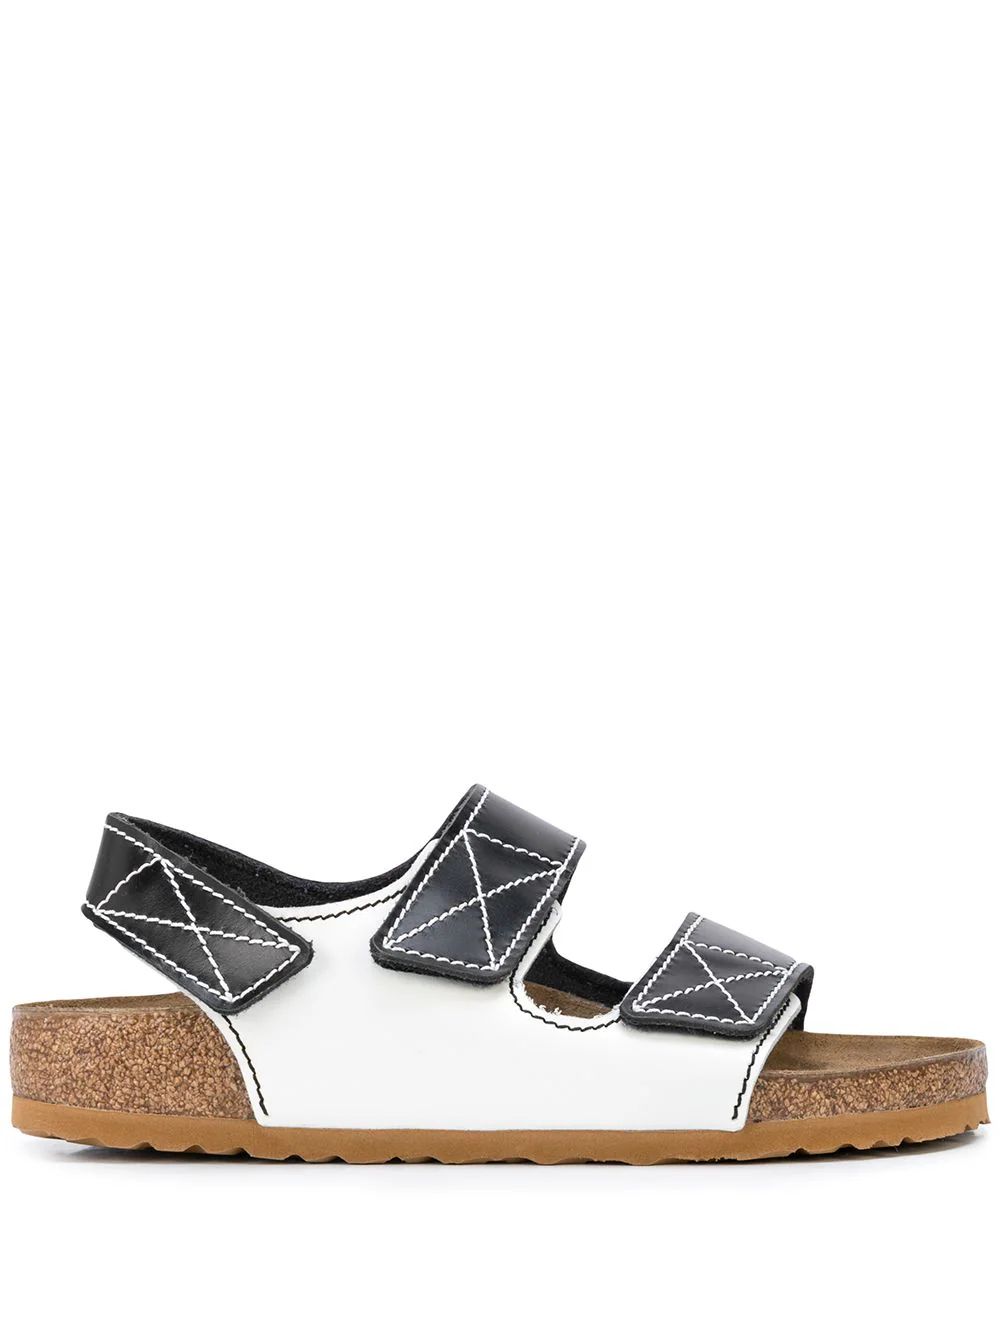 x Birkenstock Milano sandals | Farfetch Global